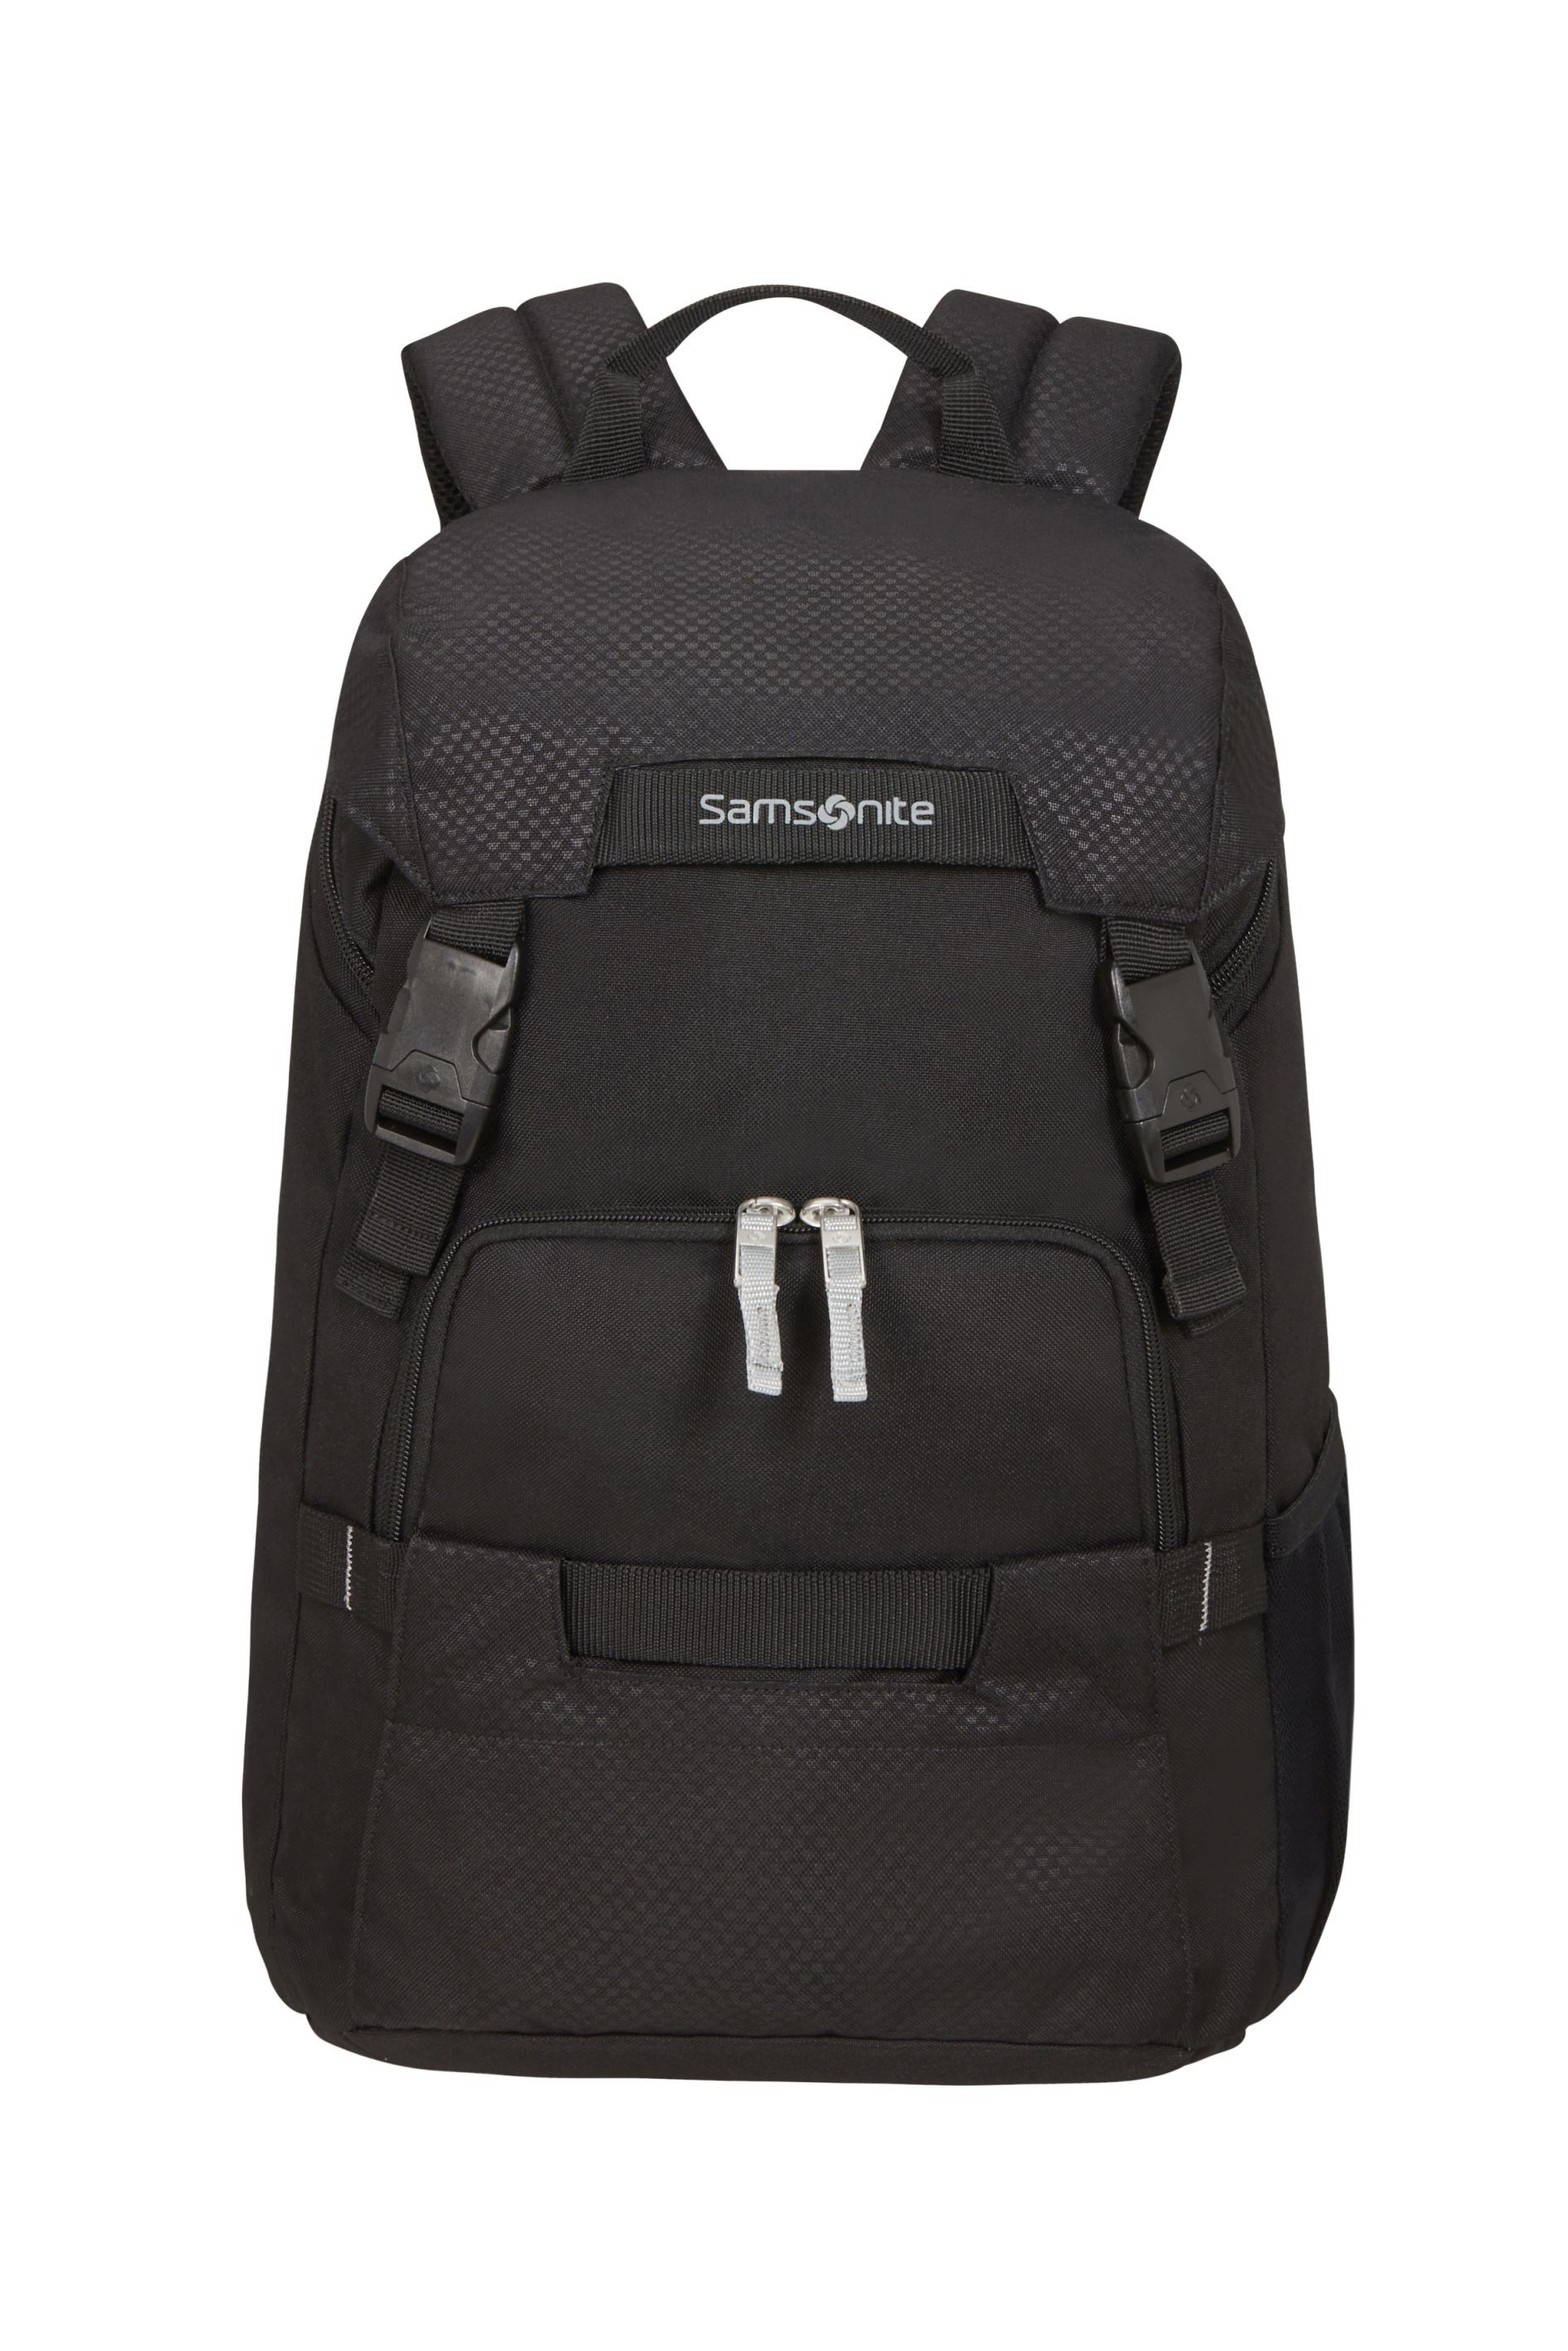 Samsonite Sonora Laptop Backpack M